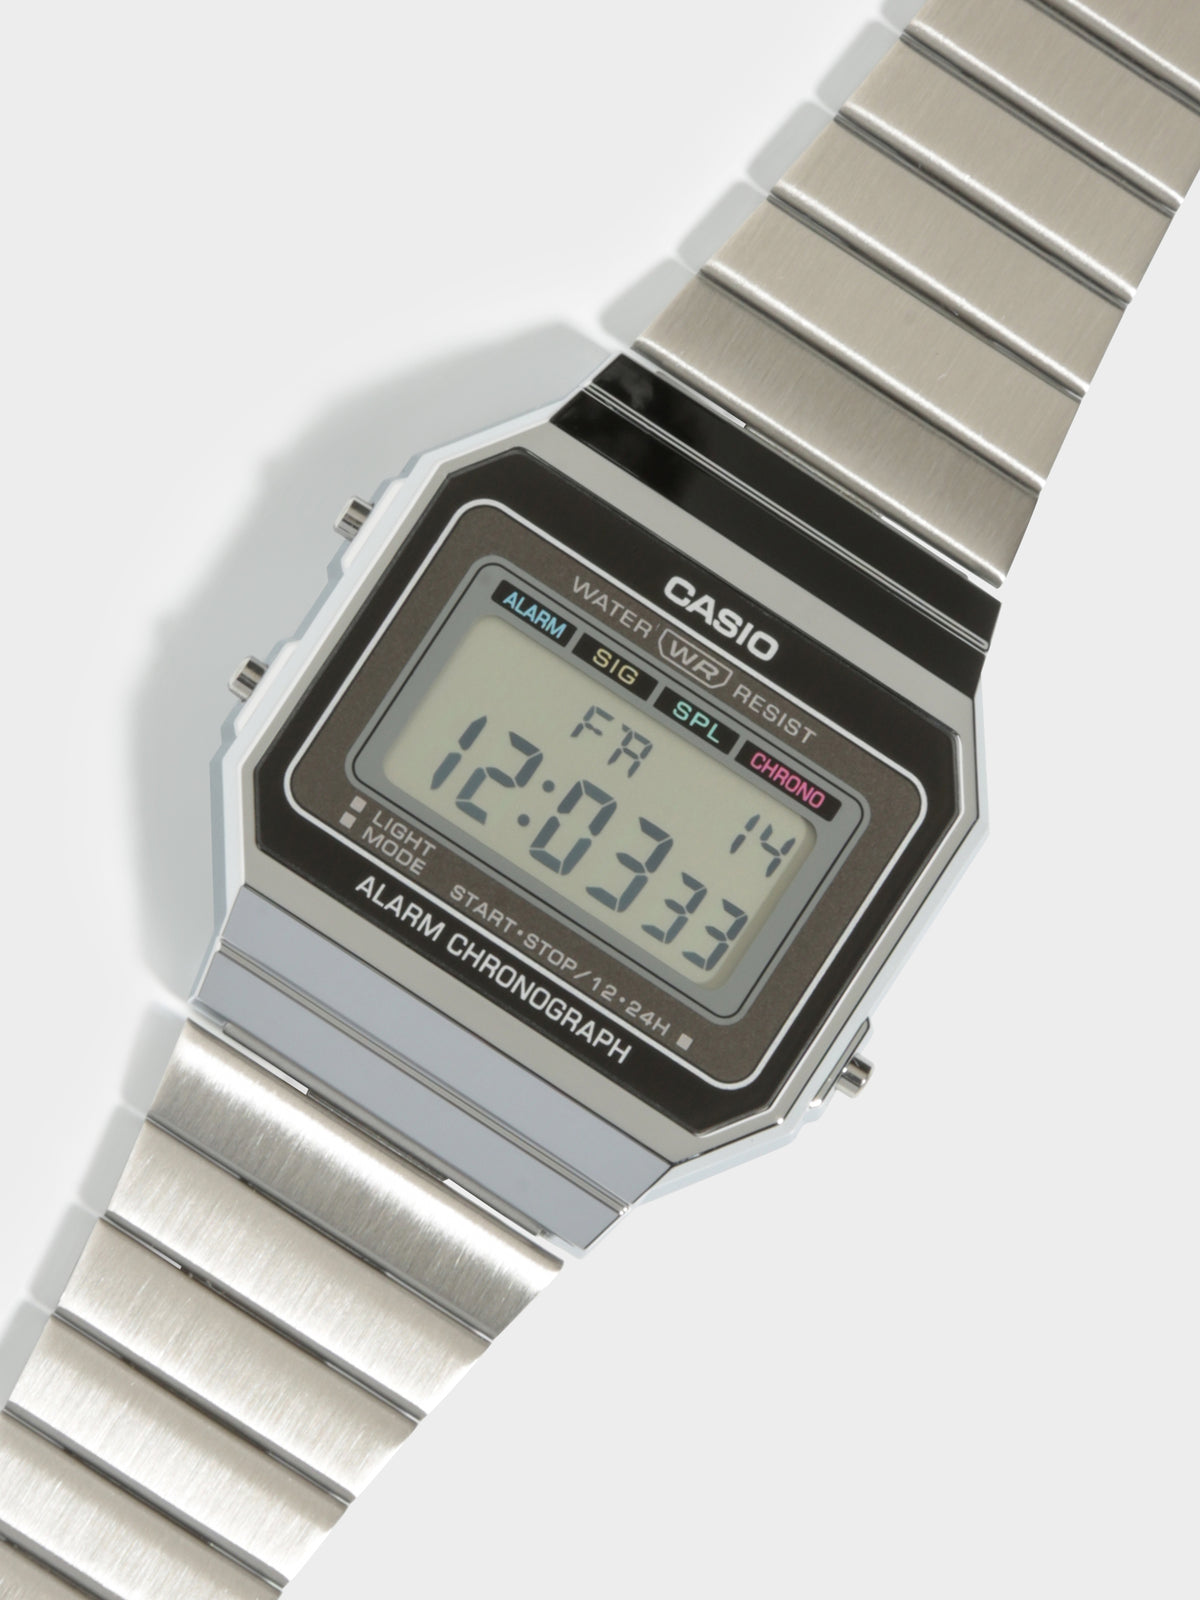 Super Slim A700 Digital Watch in Sliver